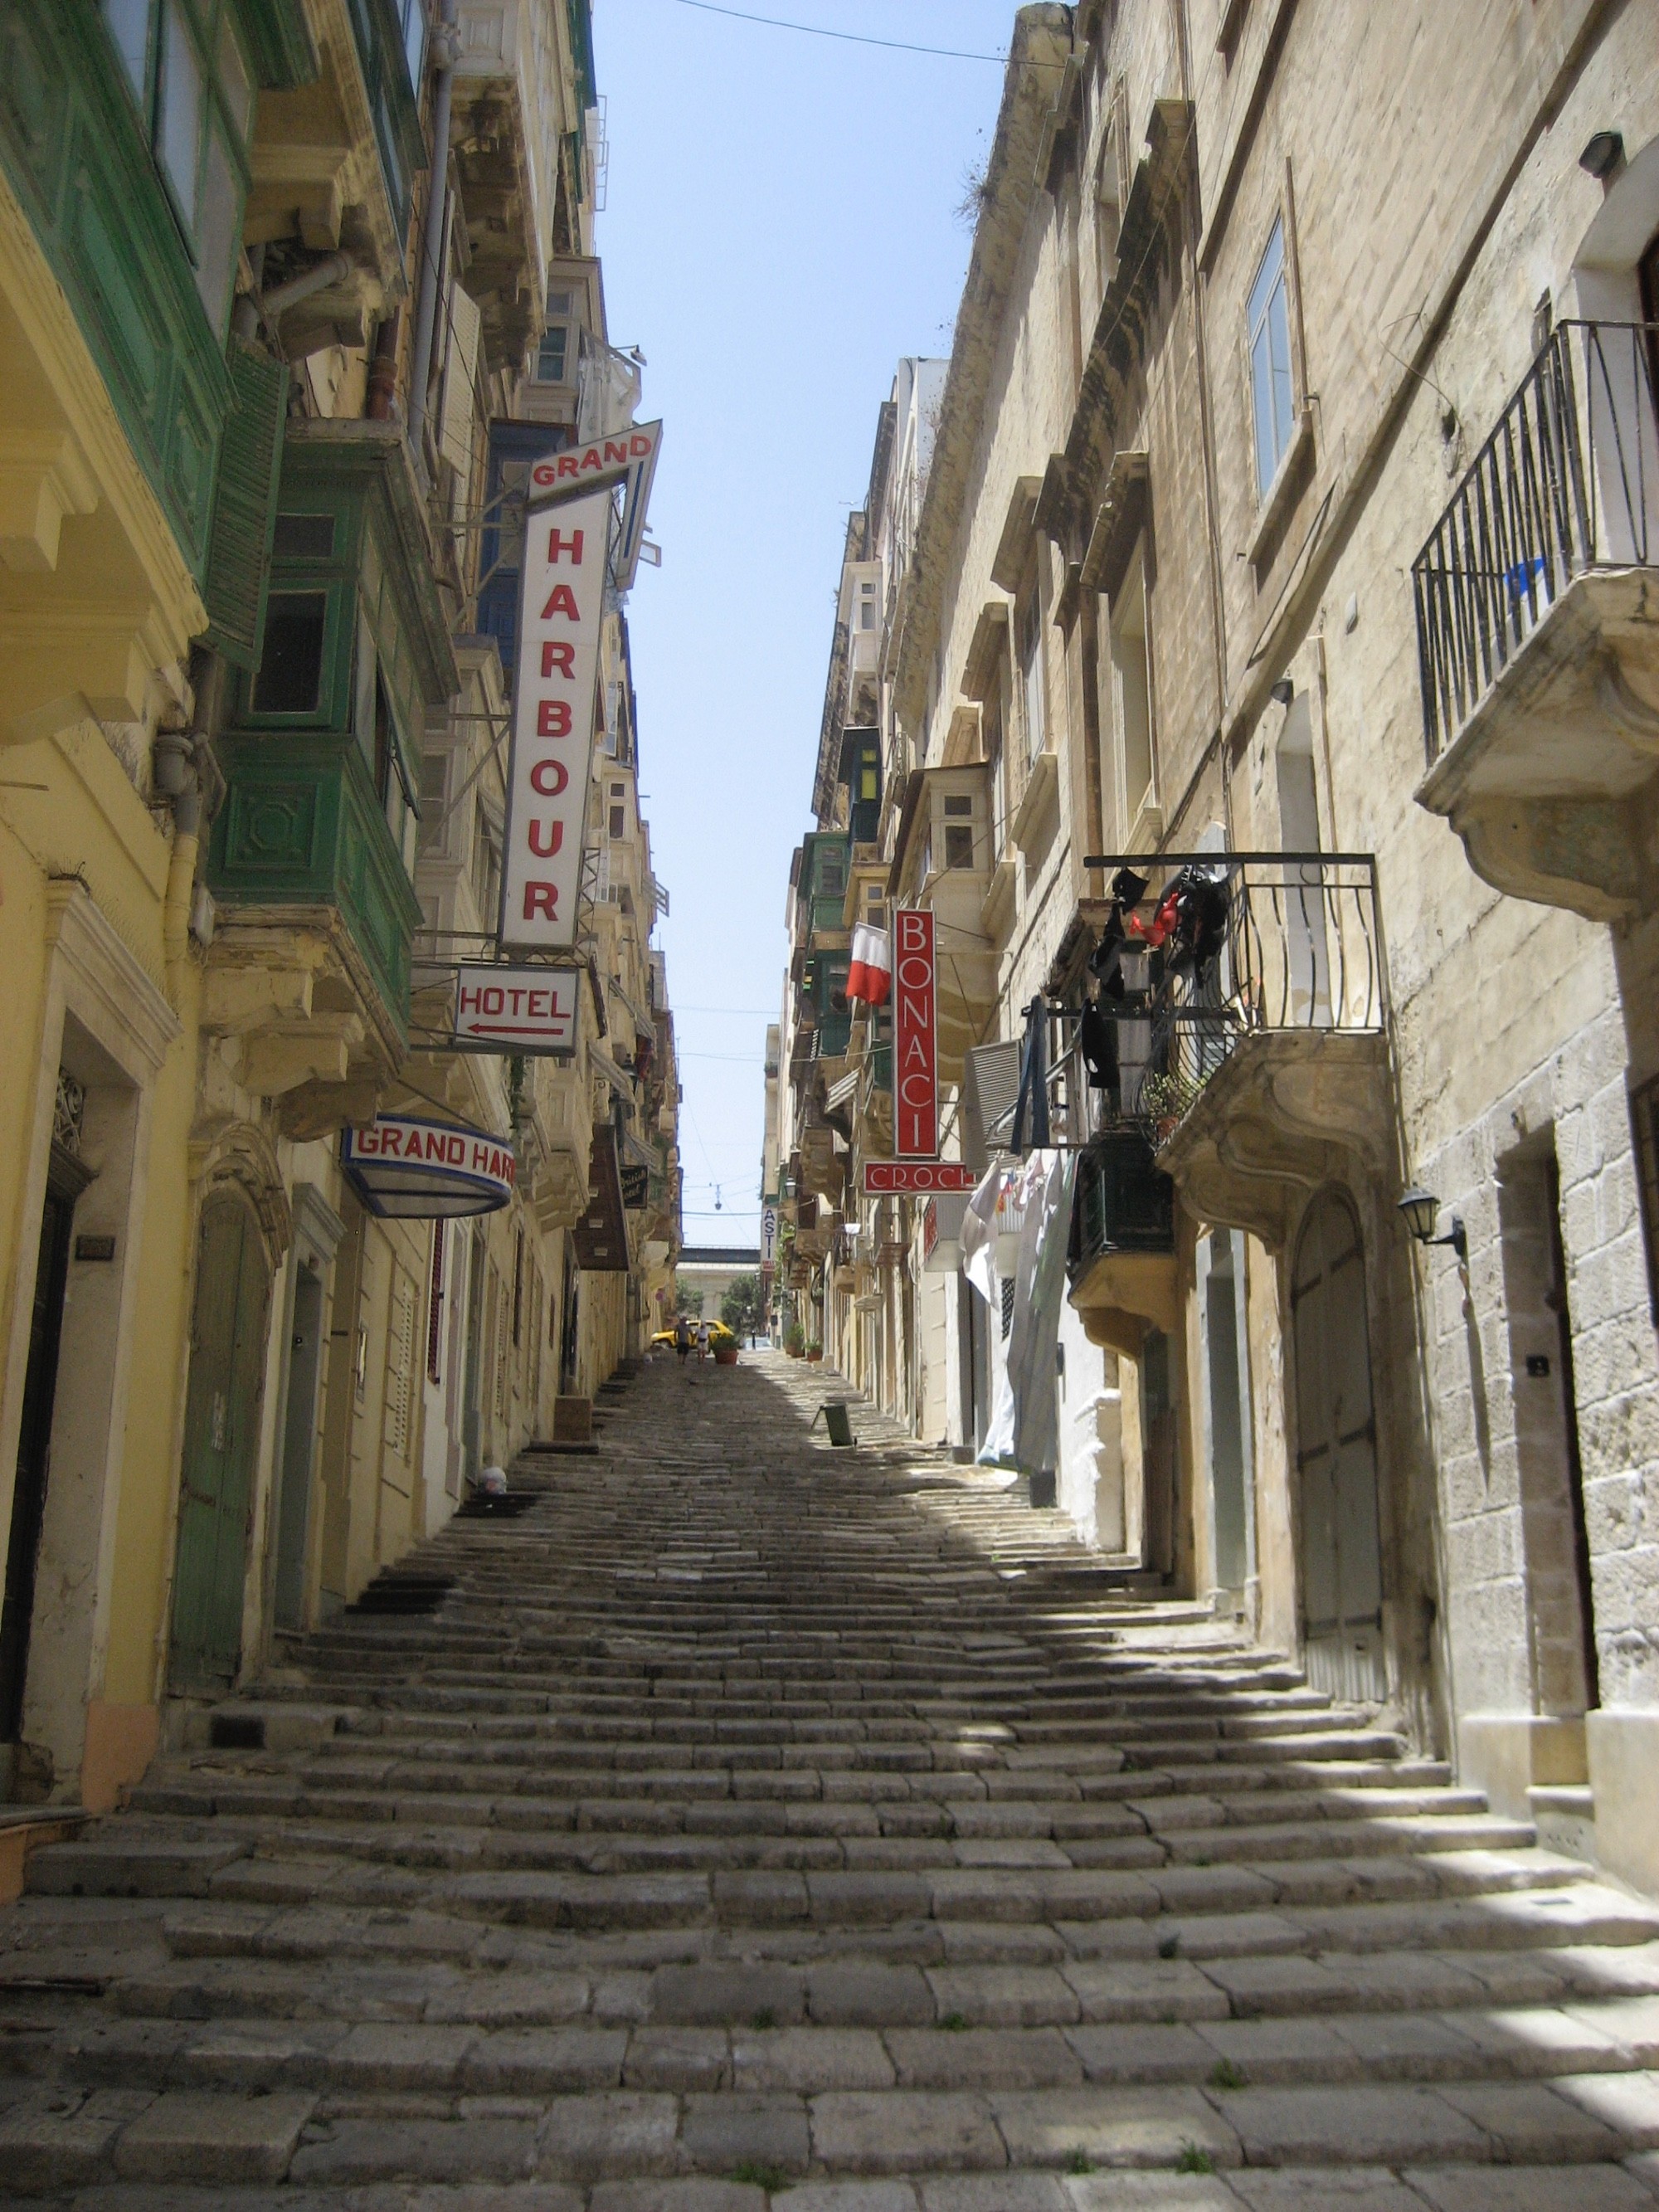 Streets of Valetta — The capital city